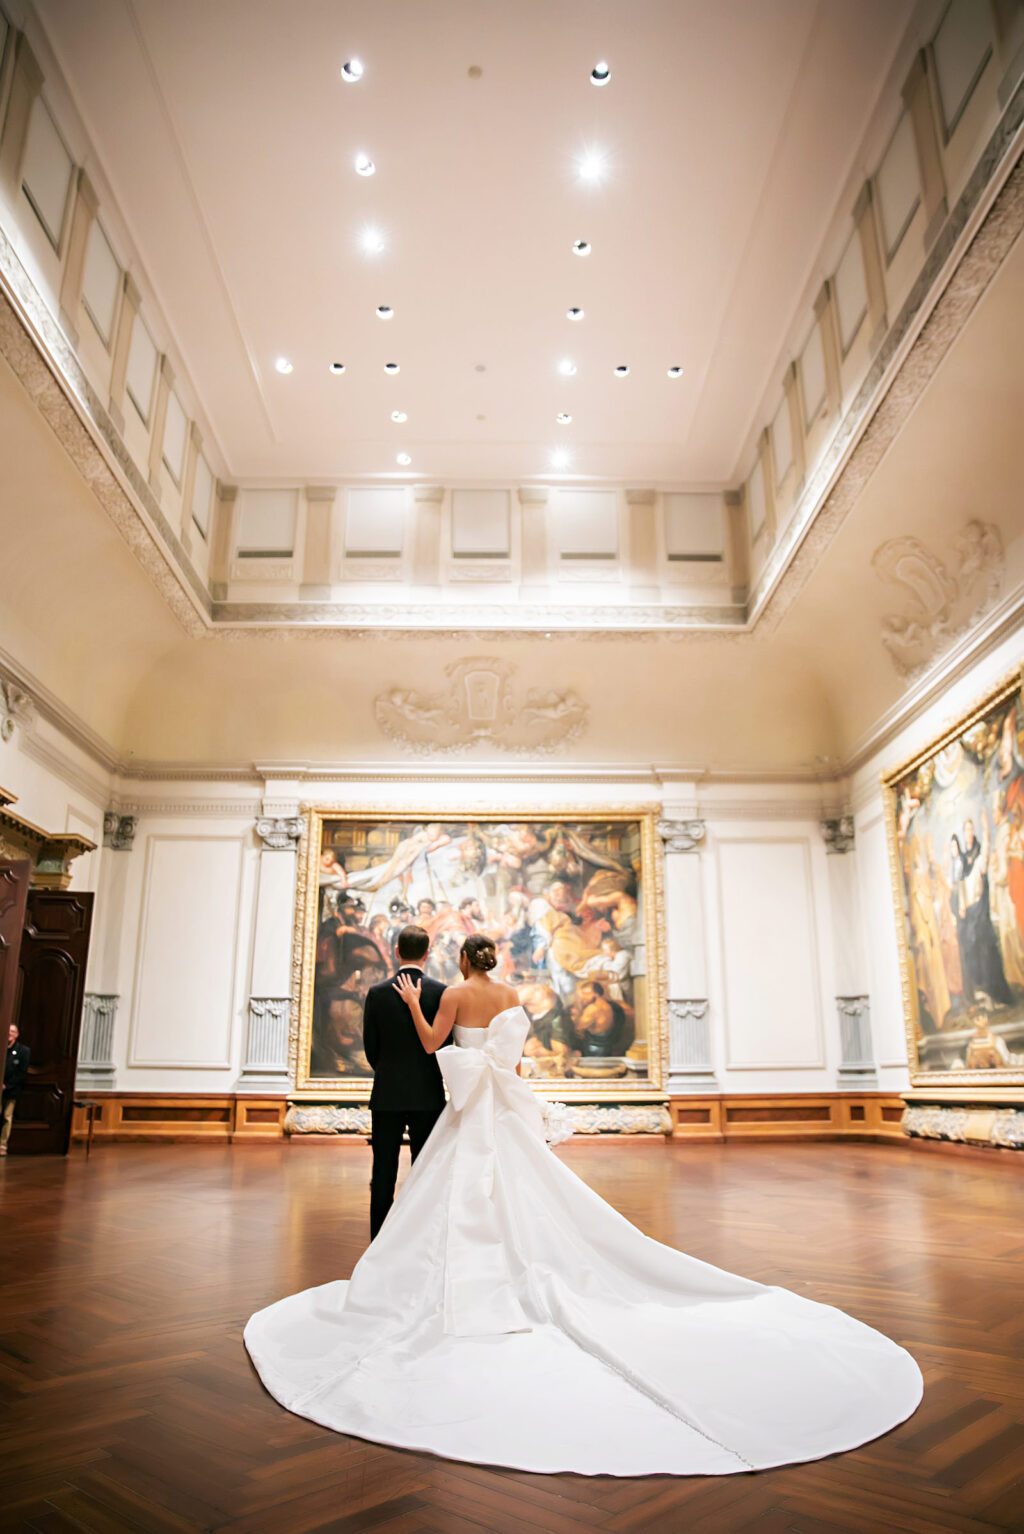 Luxurious Modern Chic Bride and Groom Wedding Portrait Inside Art Gallery | Tampa Bay Wedding Photographer Limelight Photography | Sarasota Wedding Venue Ringling Museum